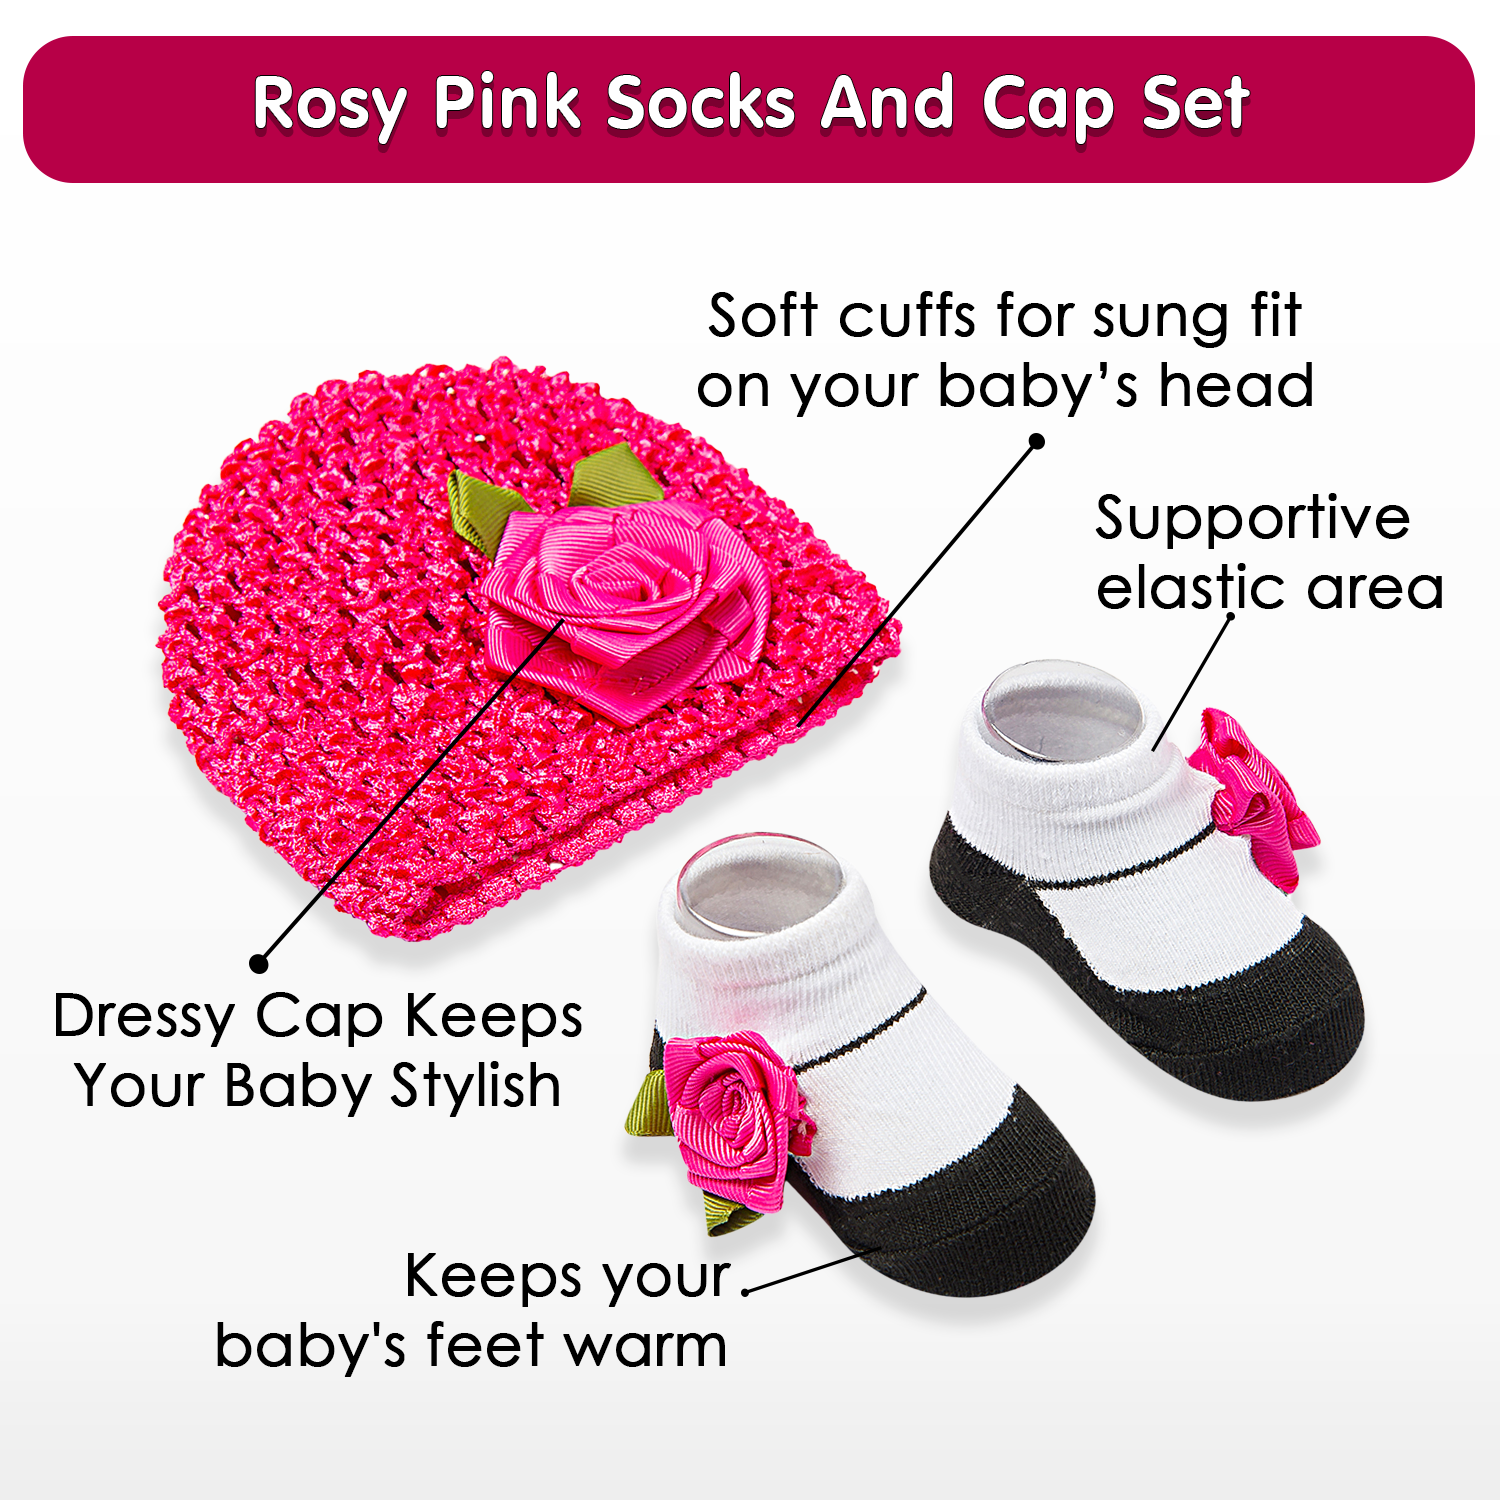 Rosy Pink Socks And Cap Set